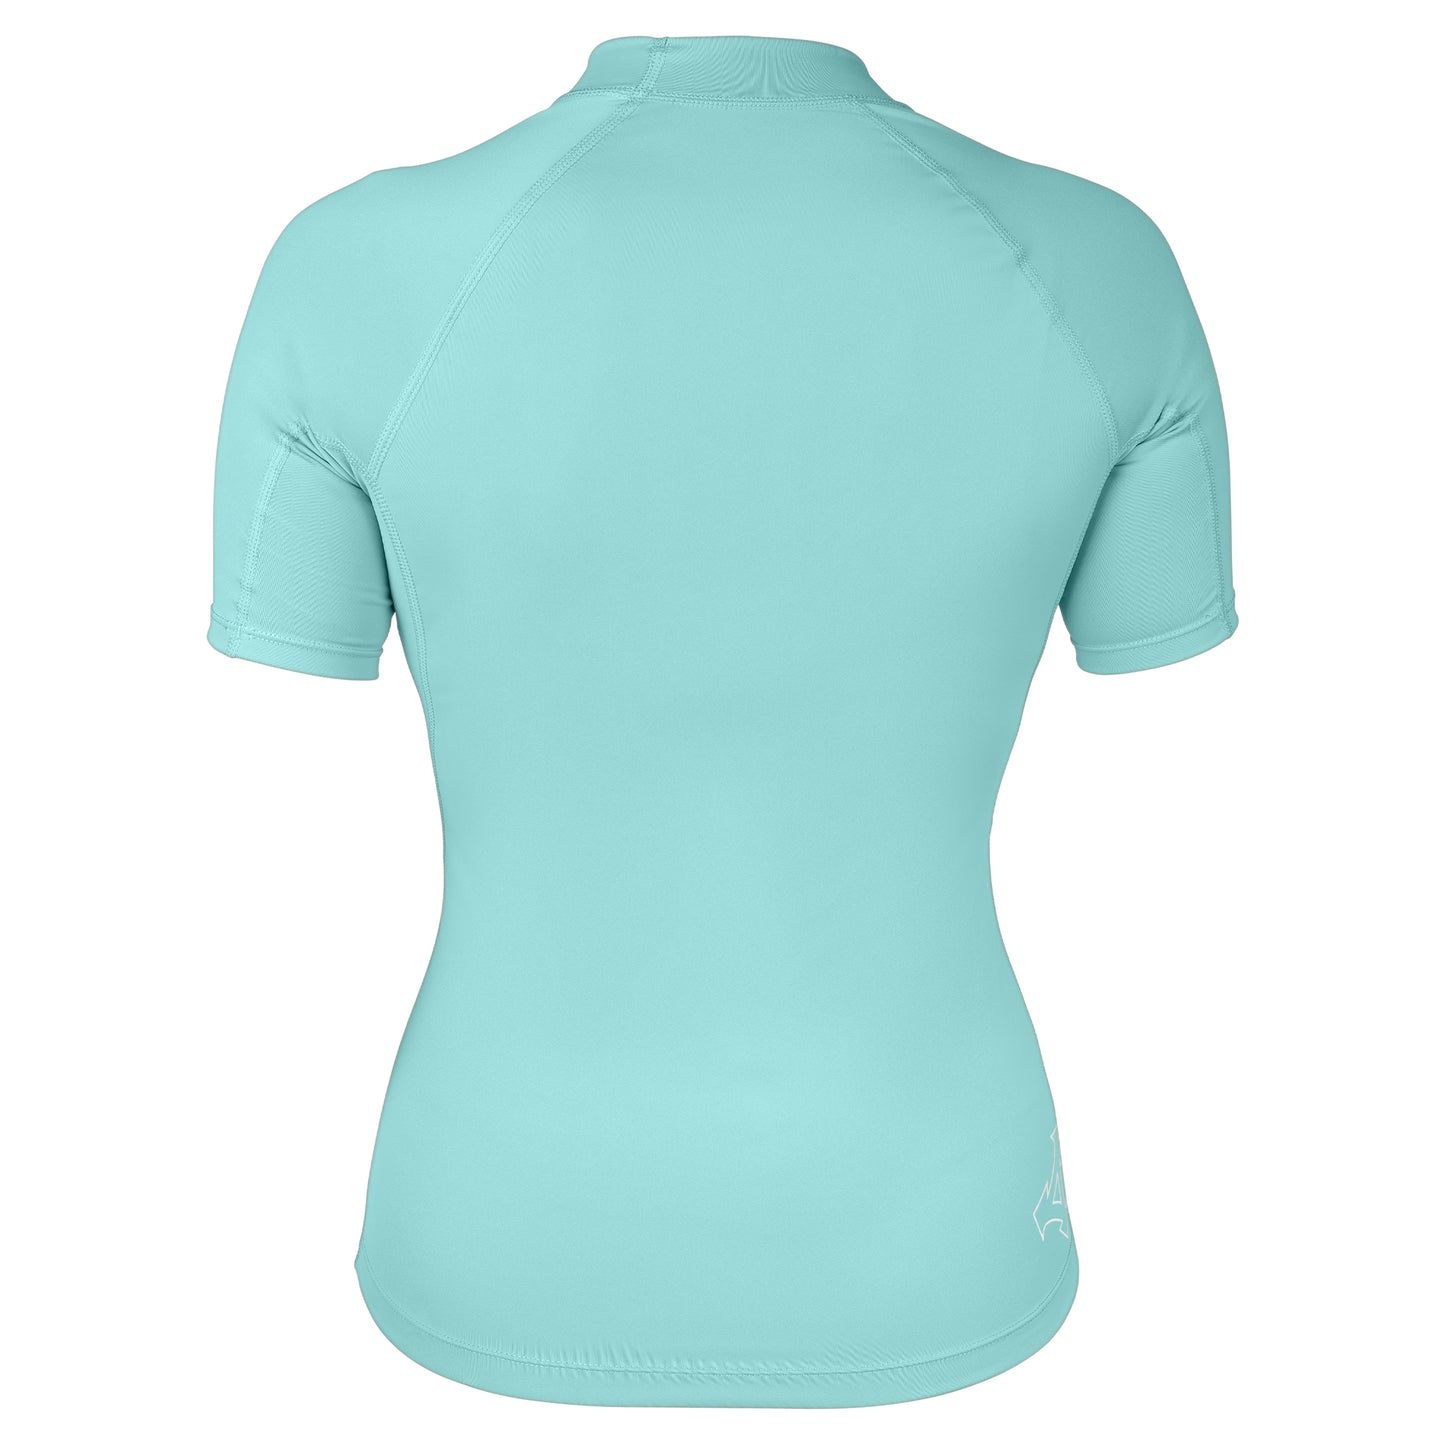 Women's Premium Stretch Short Sleeve Performance Fit UV Top